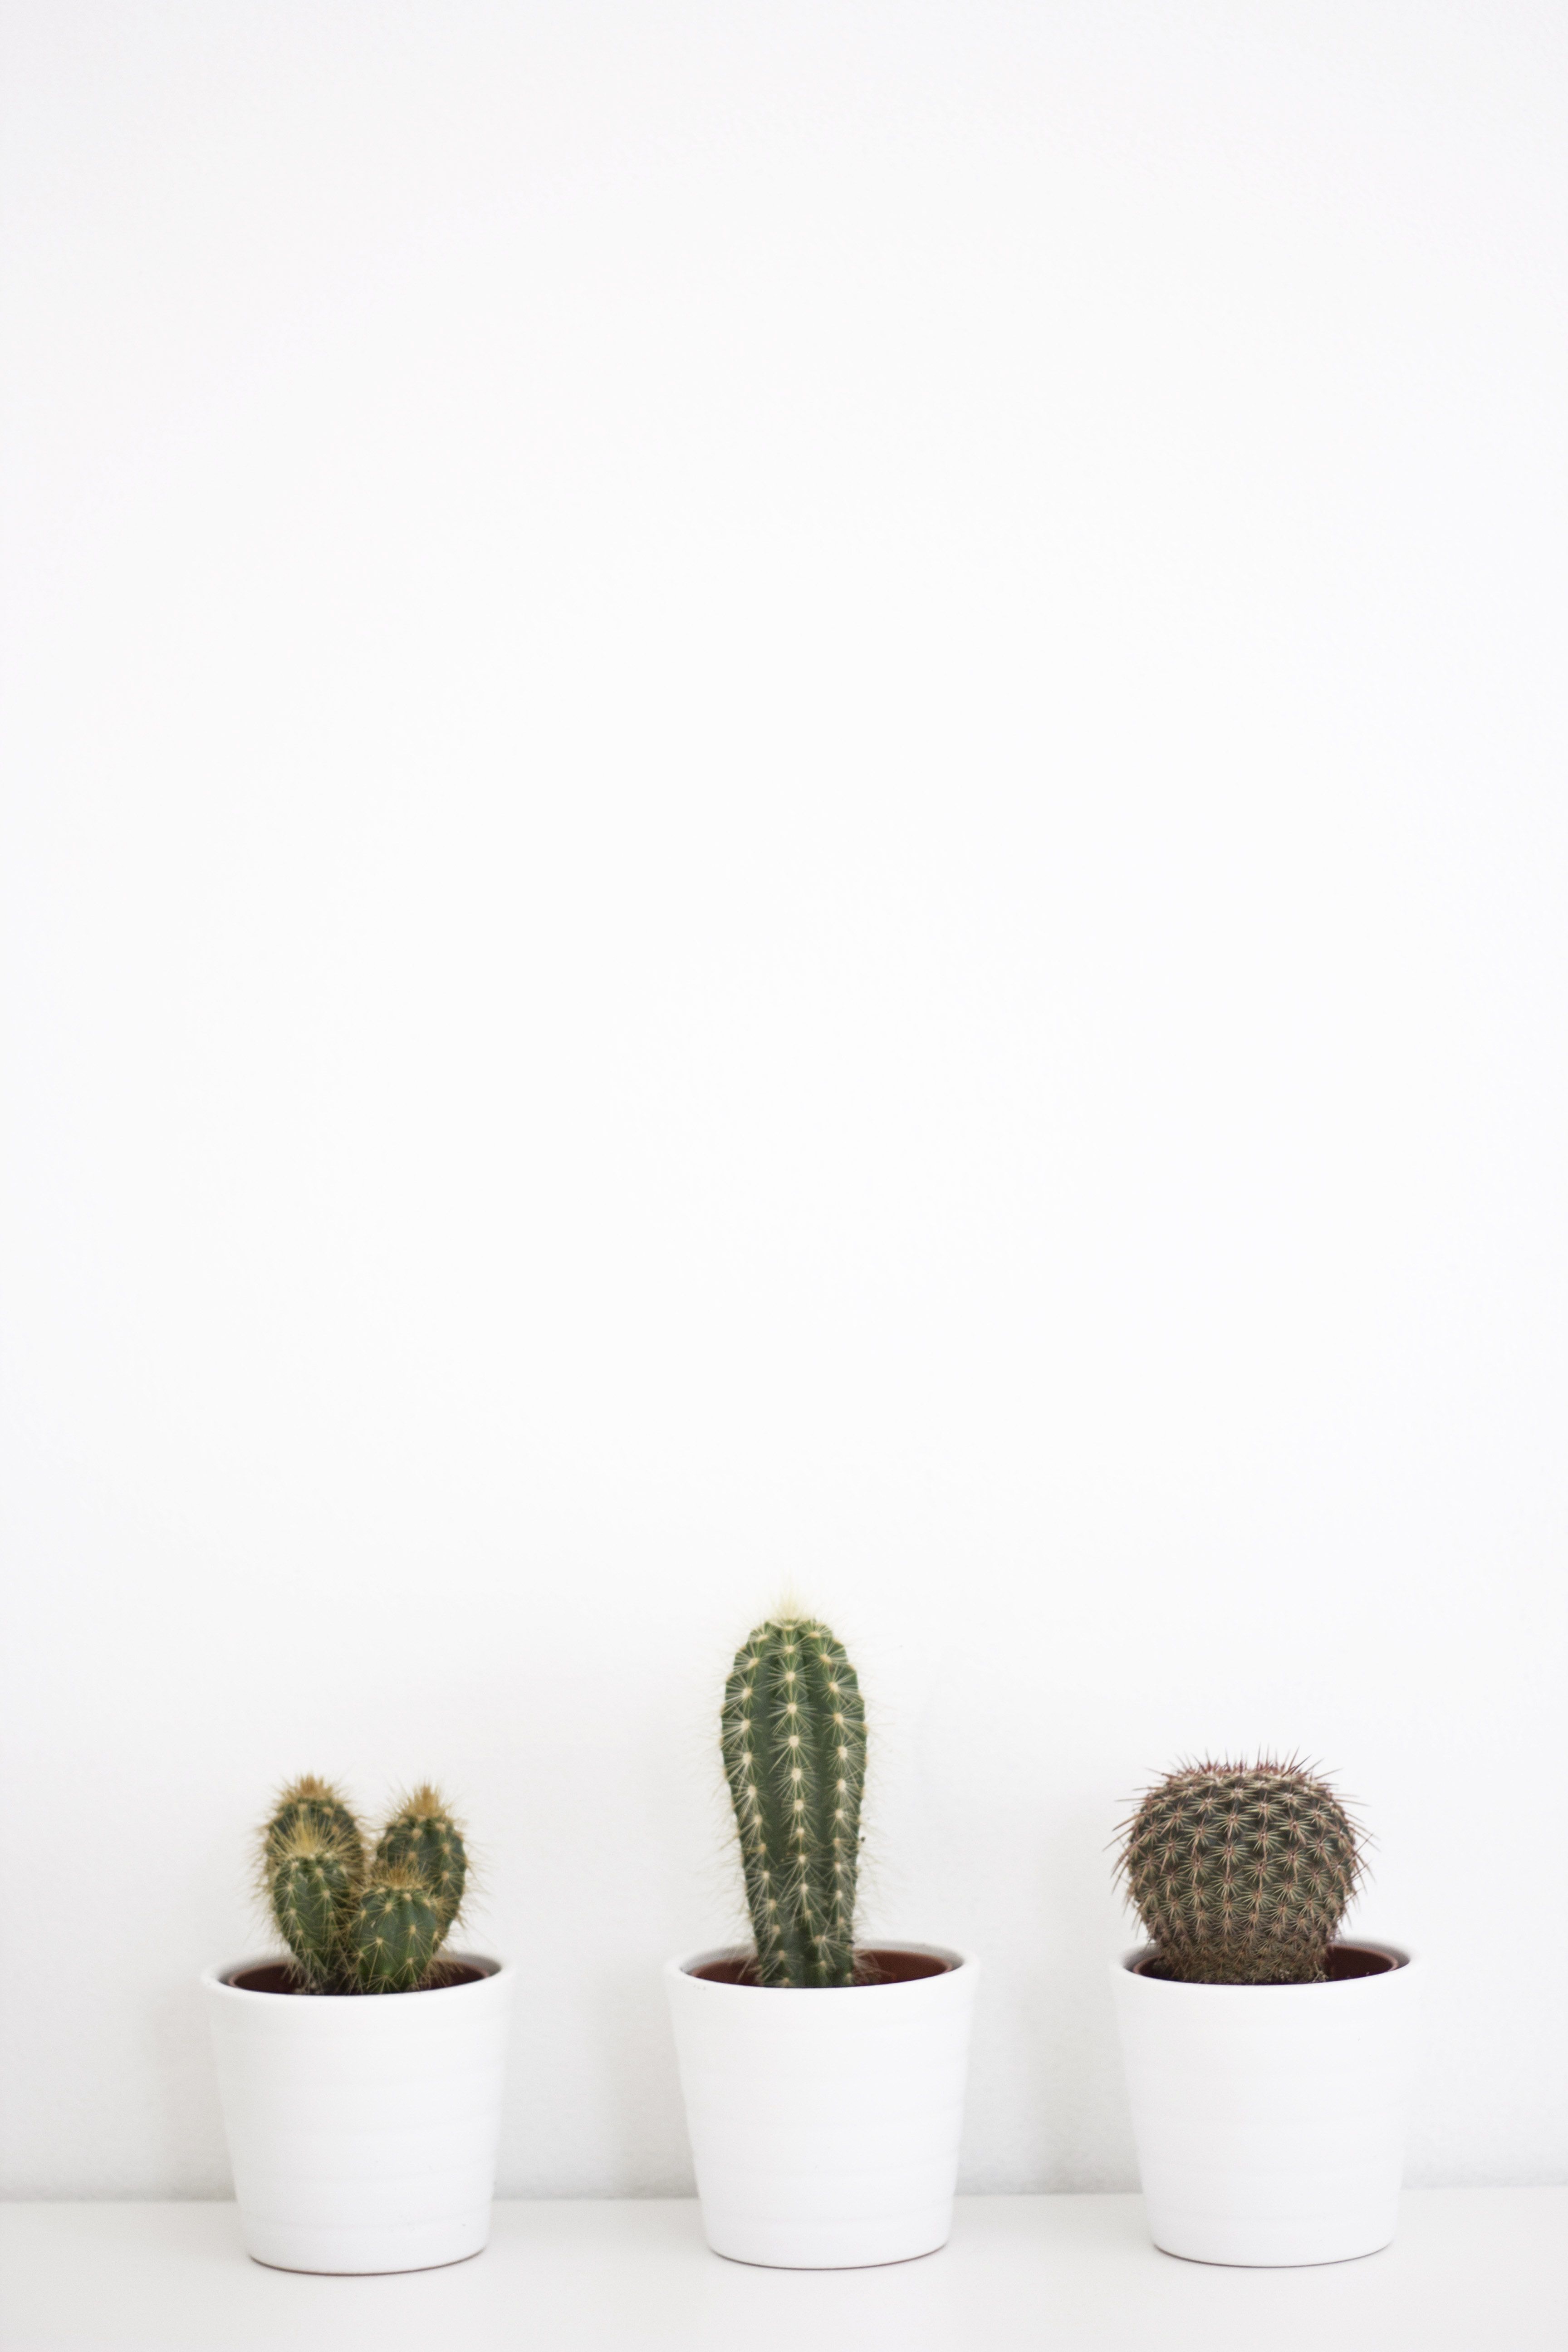 Three small cactus plants in white pots - Cactus